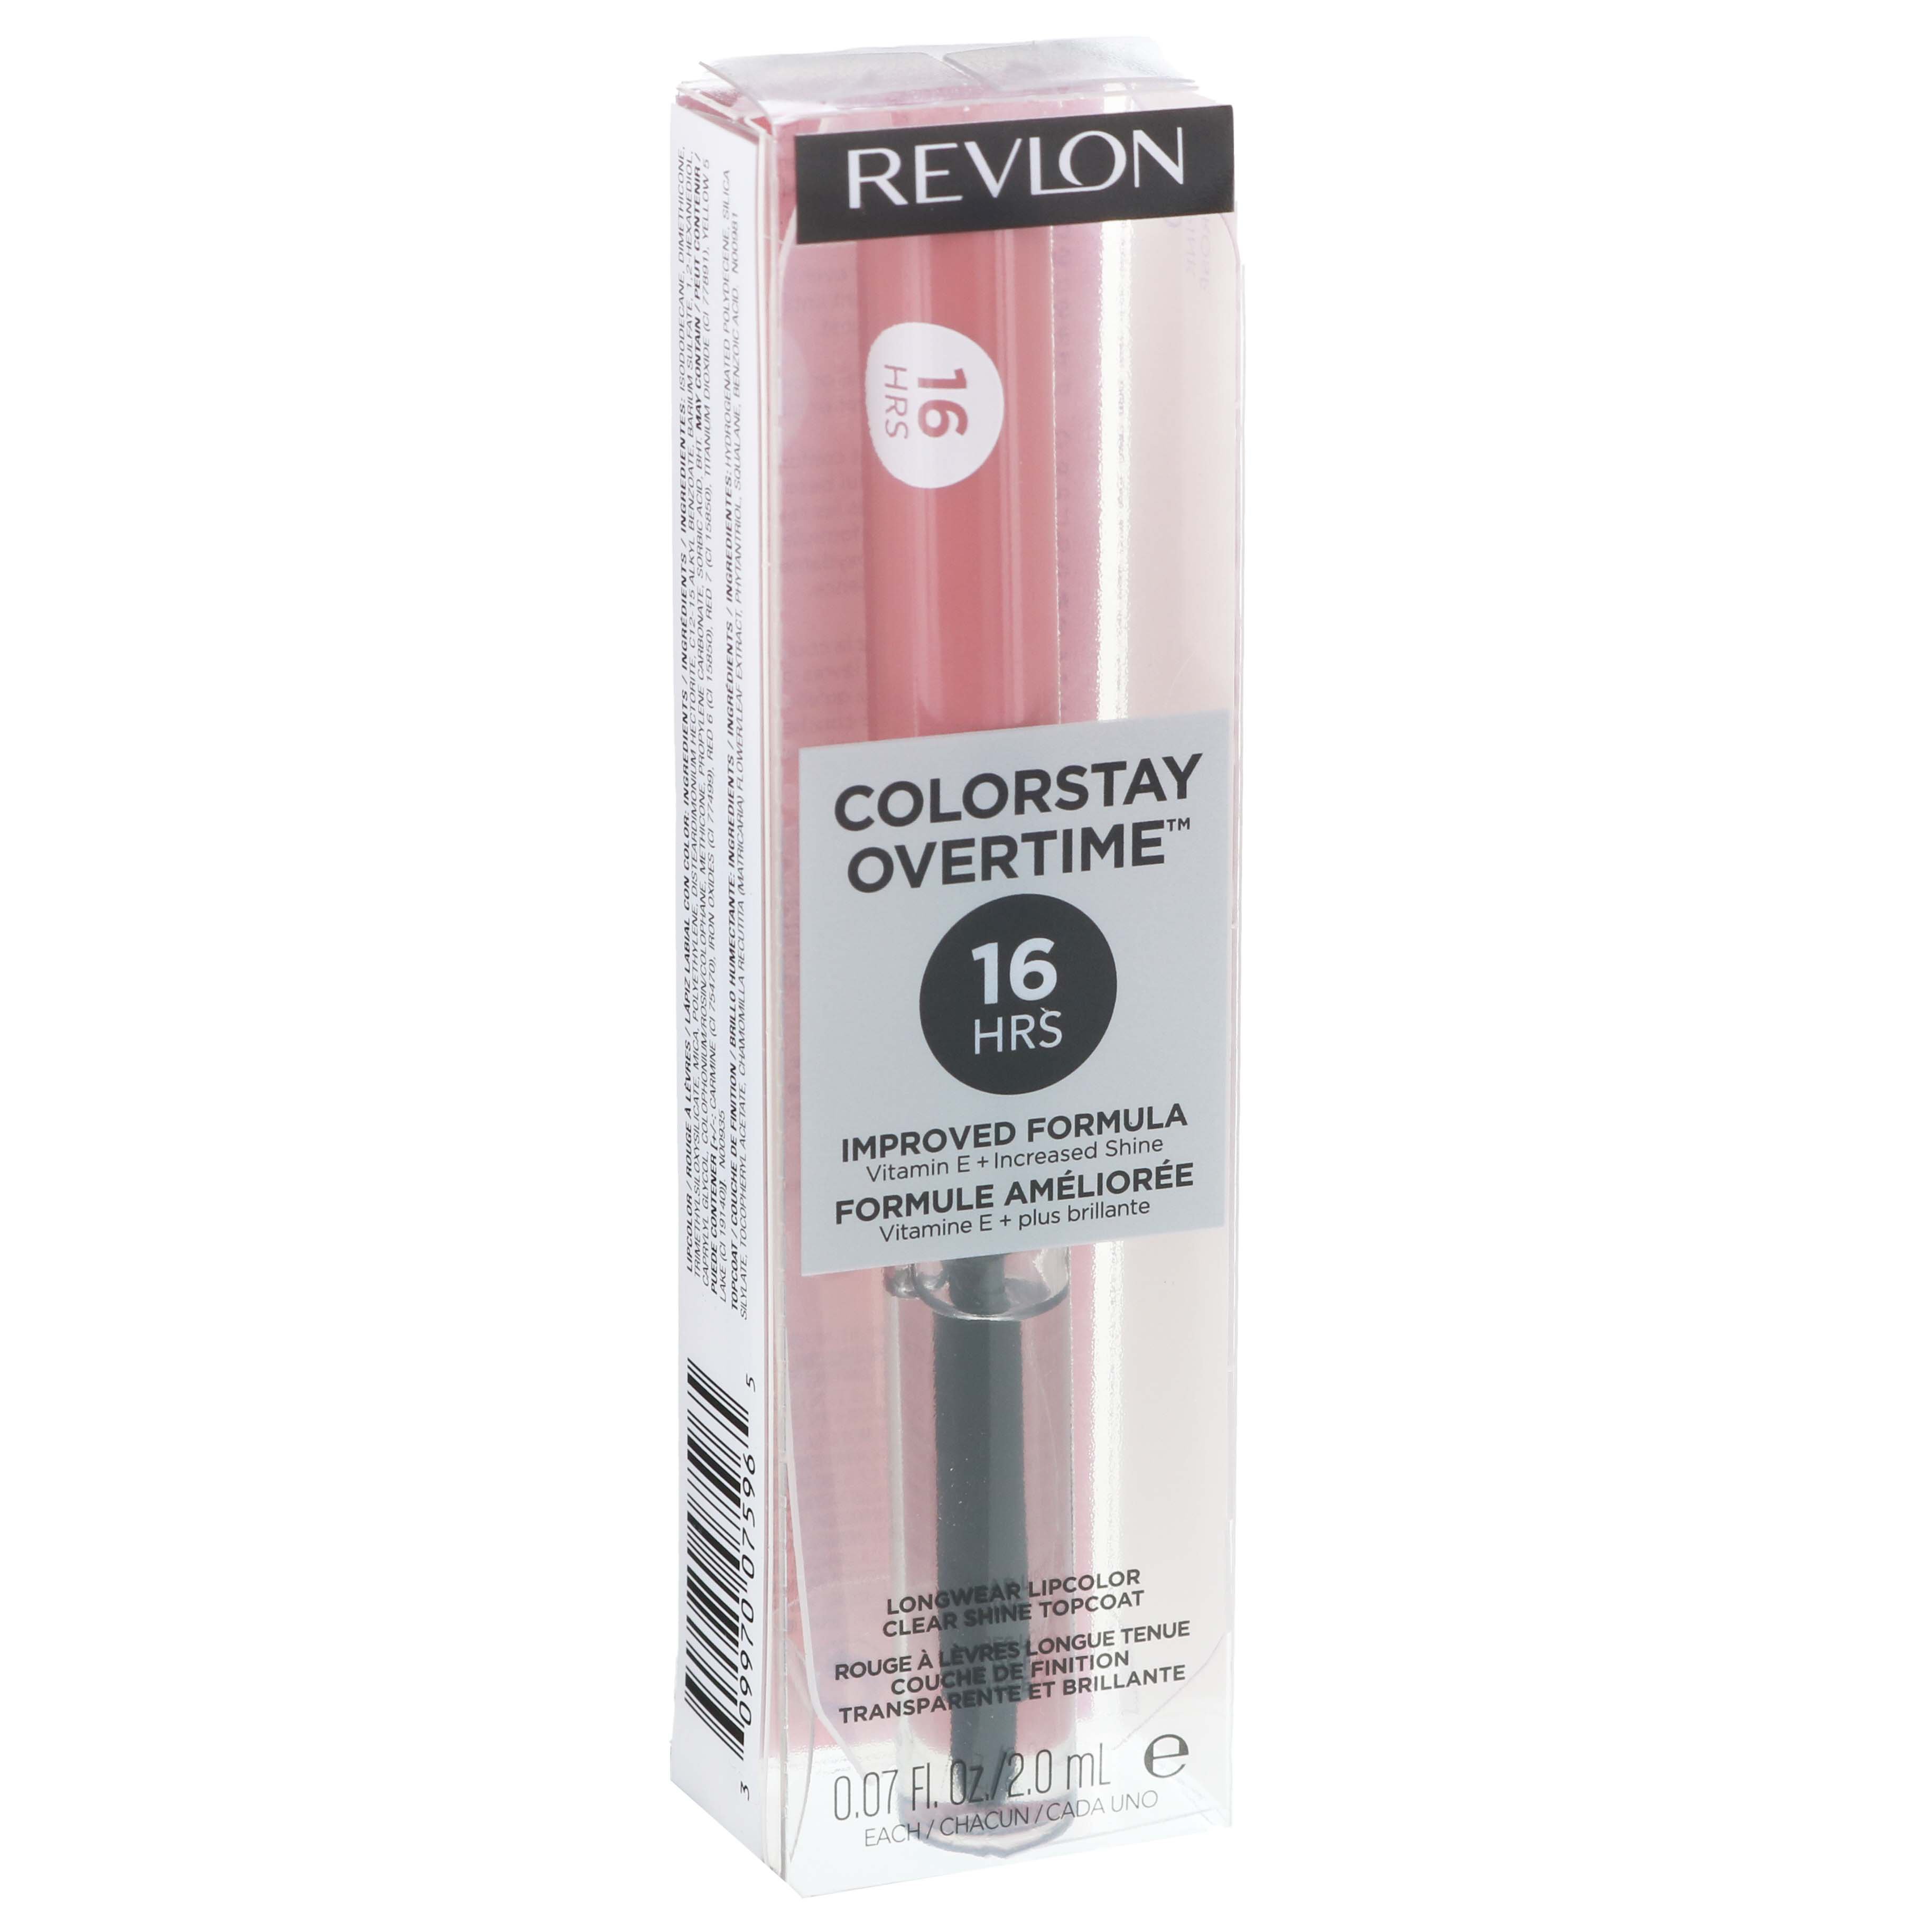 Revlon ColorStay Overtime Lipcolor, 24/7 Pink - Shop Lips at H-E-B